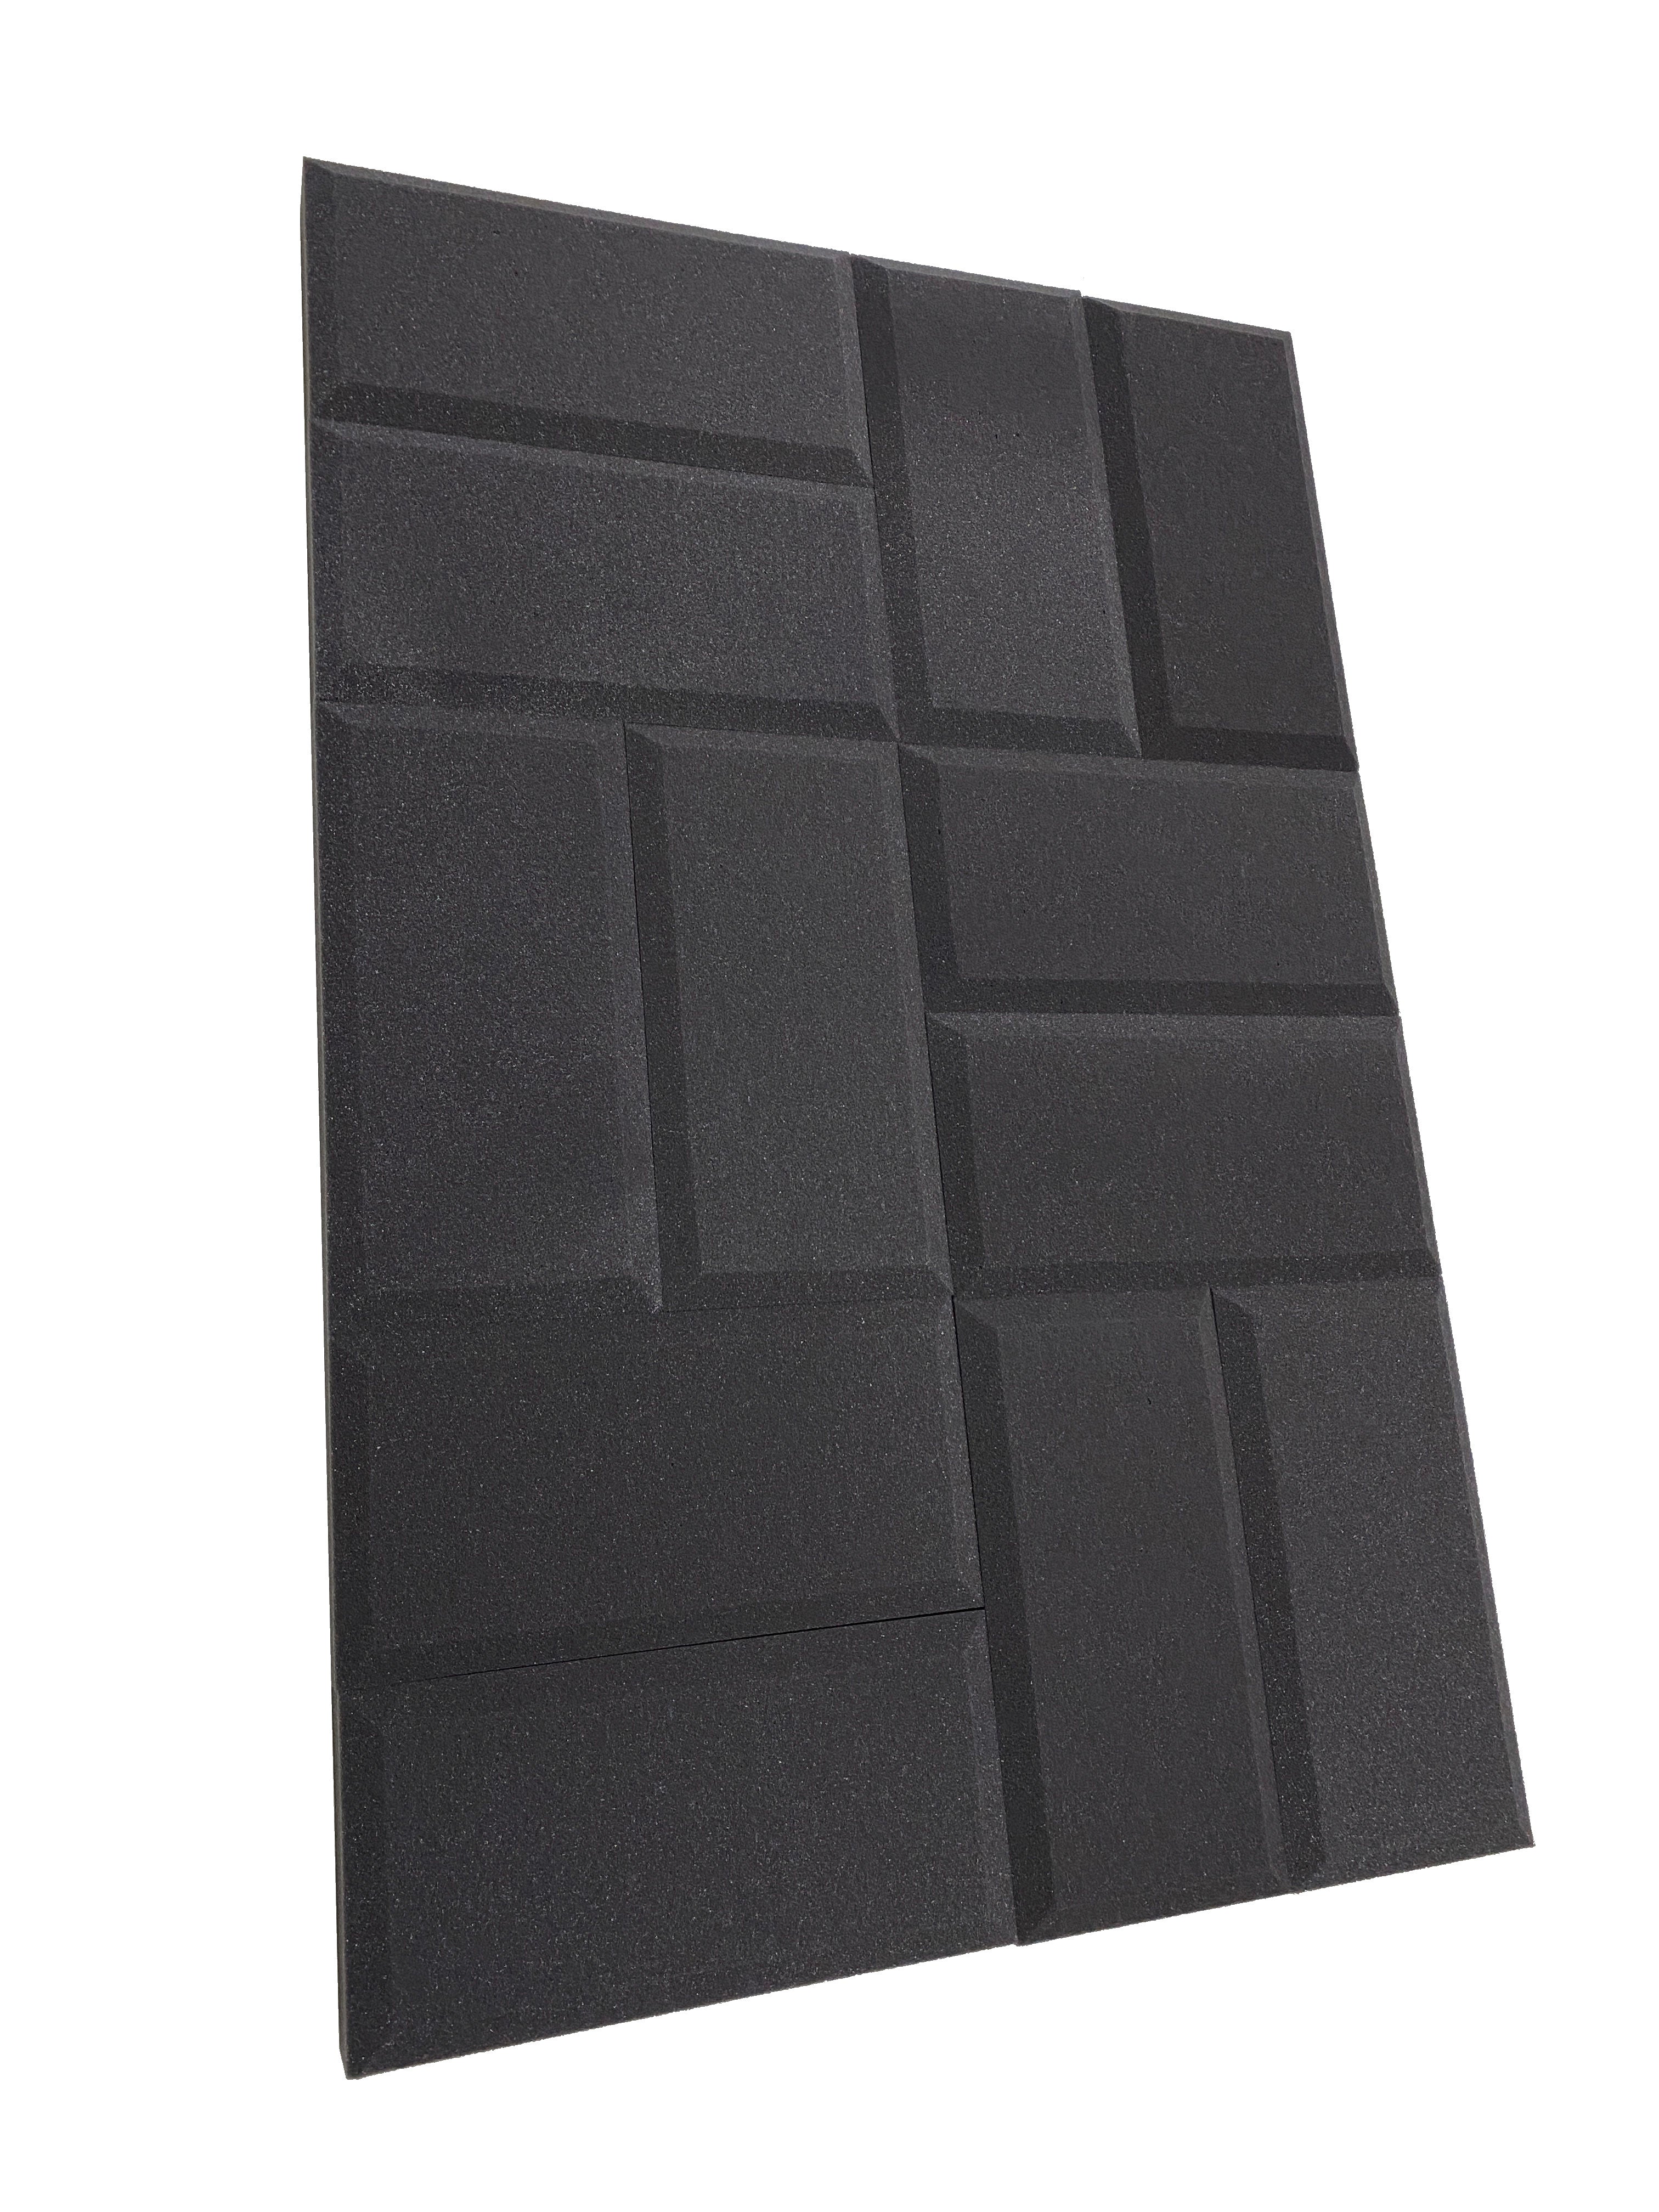 Subway Acoustic Studio Foam Tile Pack - LIMITED OFFER - 0